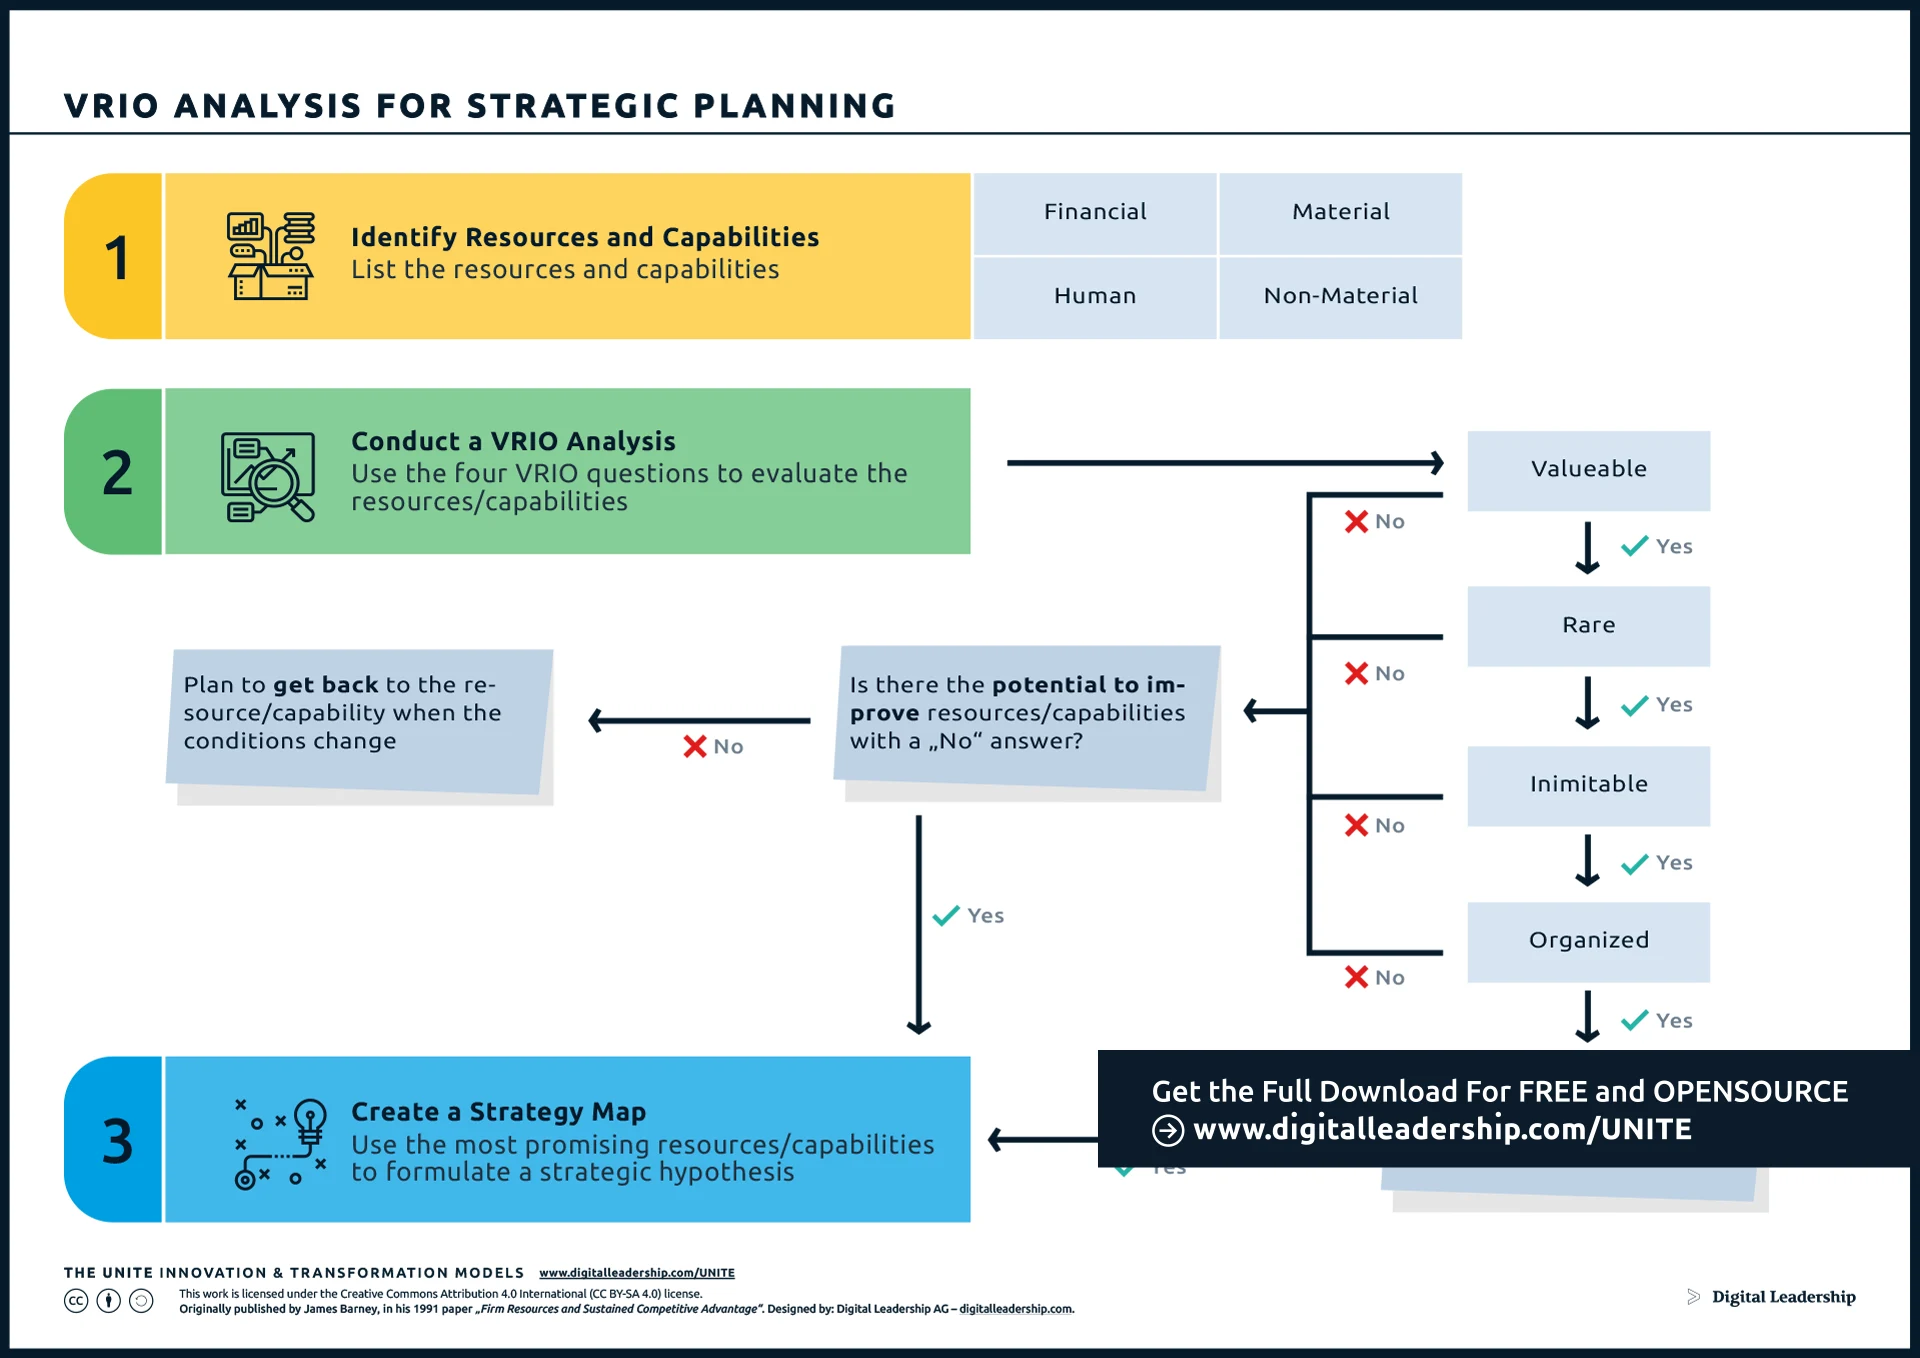 VRIO Analysis for Strategic Planning